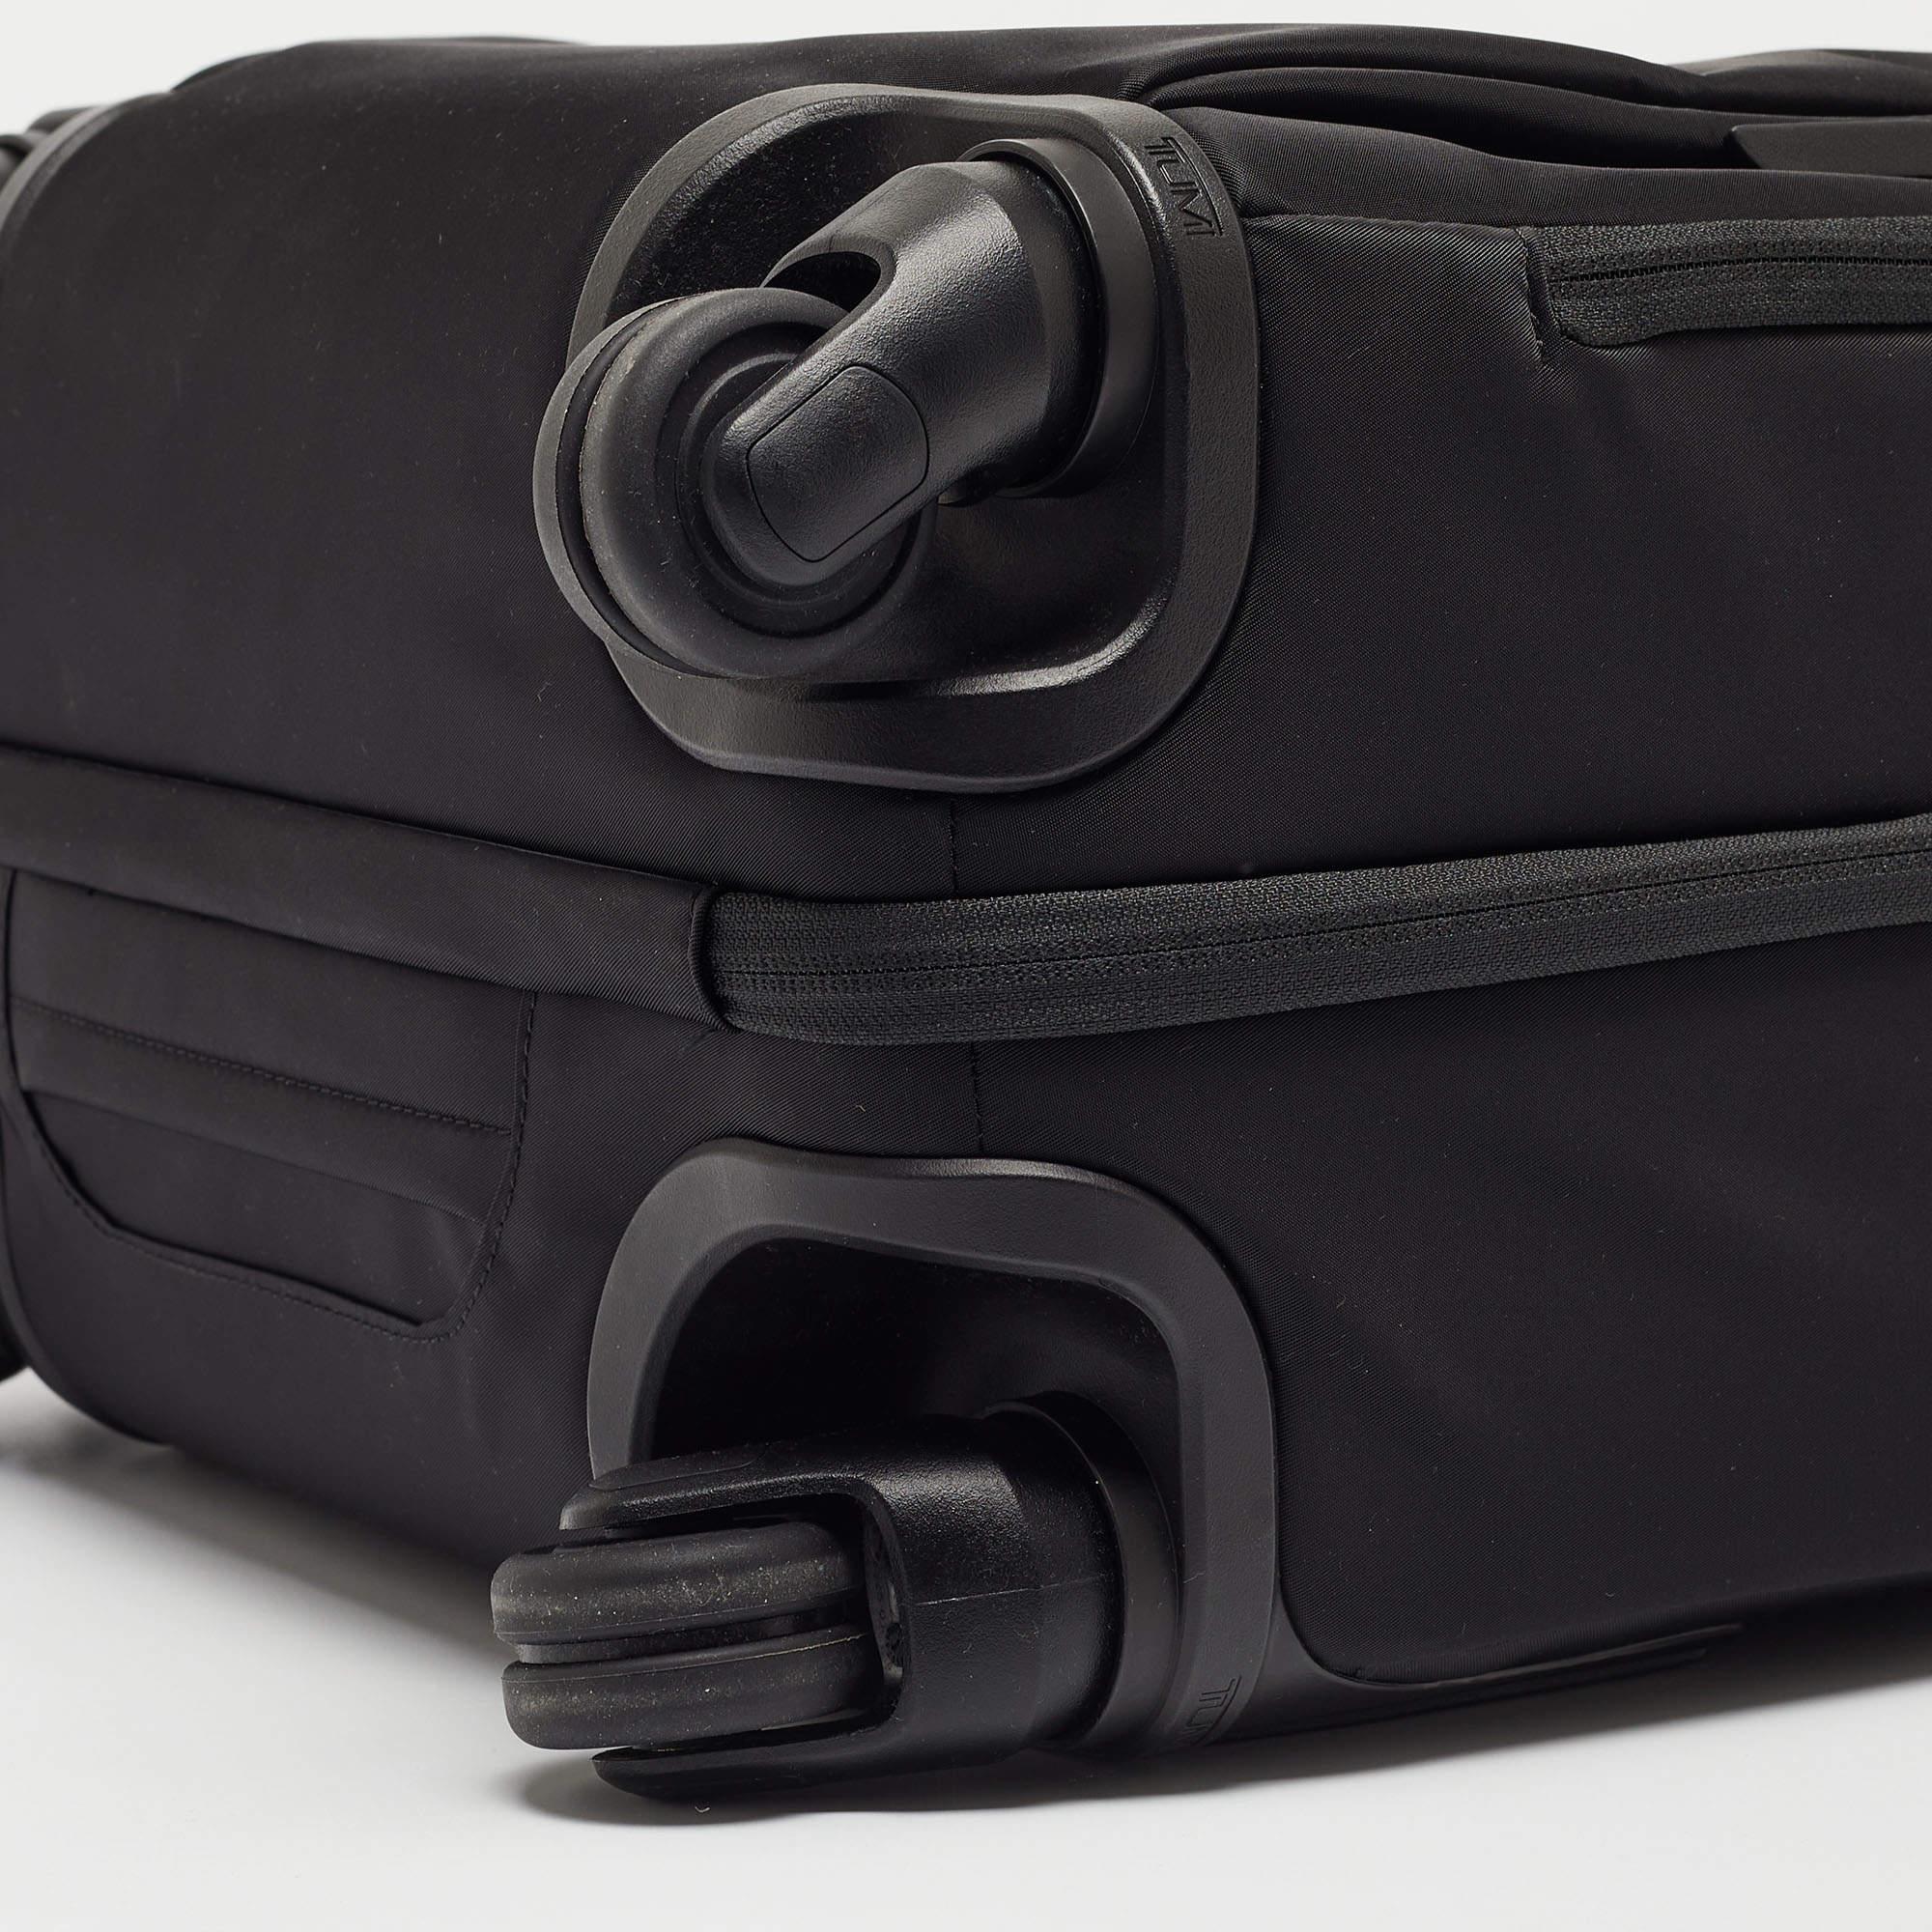 TUMI Black Nylon Compact Oxford Carry On Luggage 2